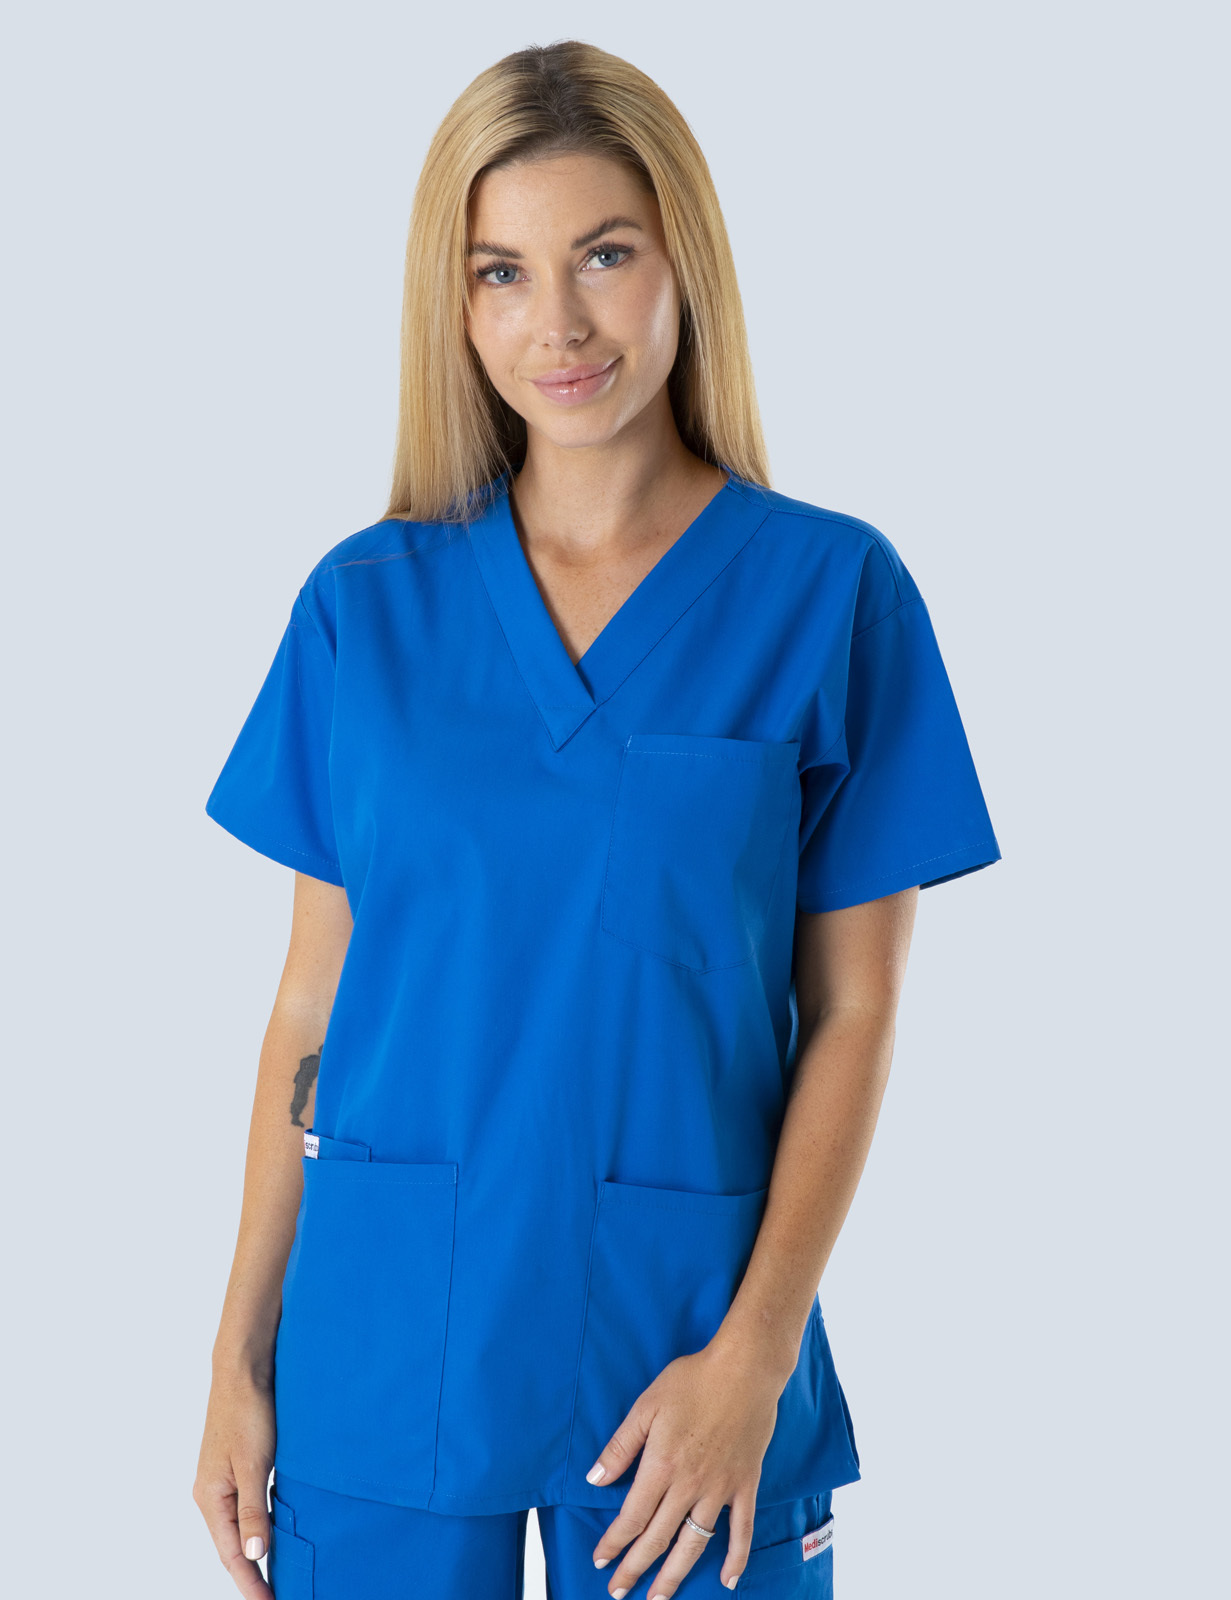 Queensland Children's Hospital Emergency Department Assistant in Nursing  Uniform Top Bundle  (4 Pocket Top in Royal incl Logos)